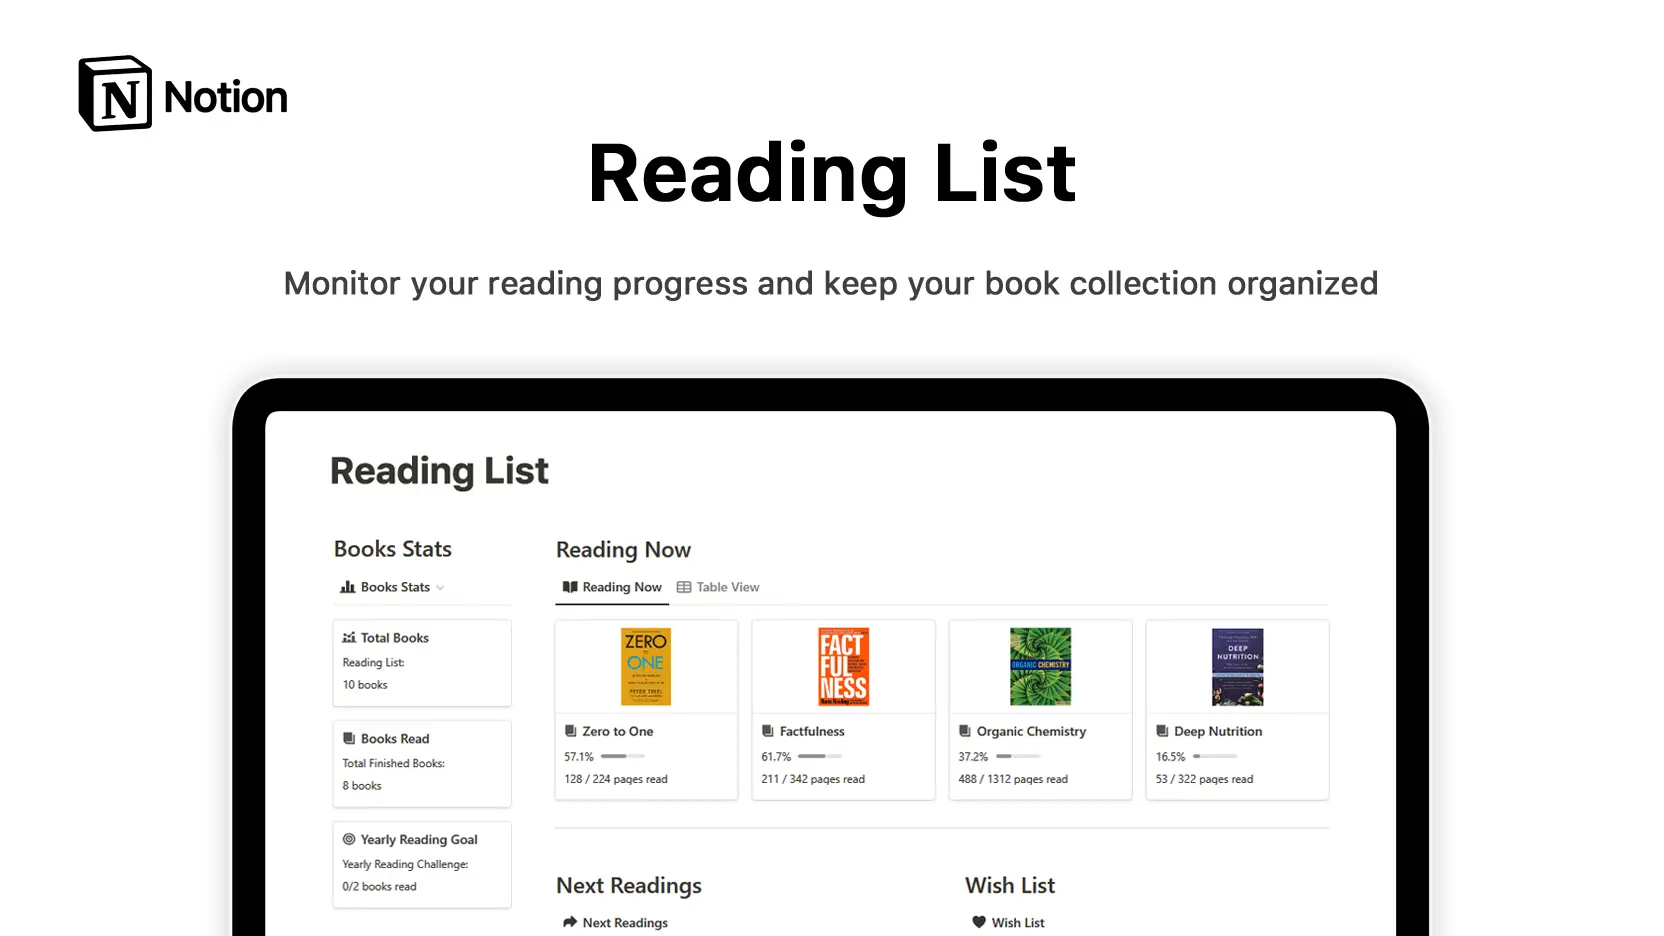 Reading List image